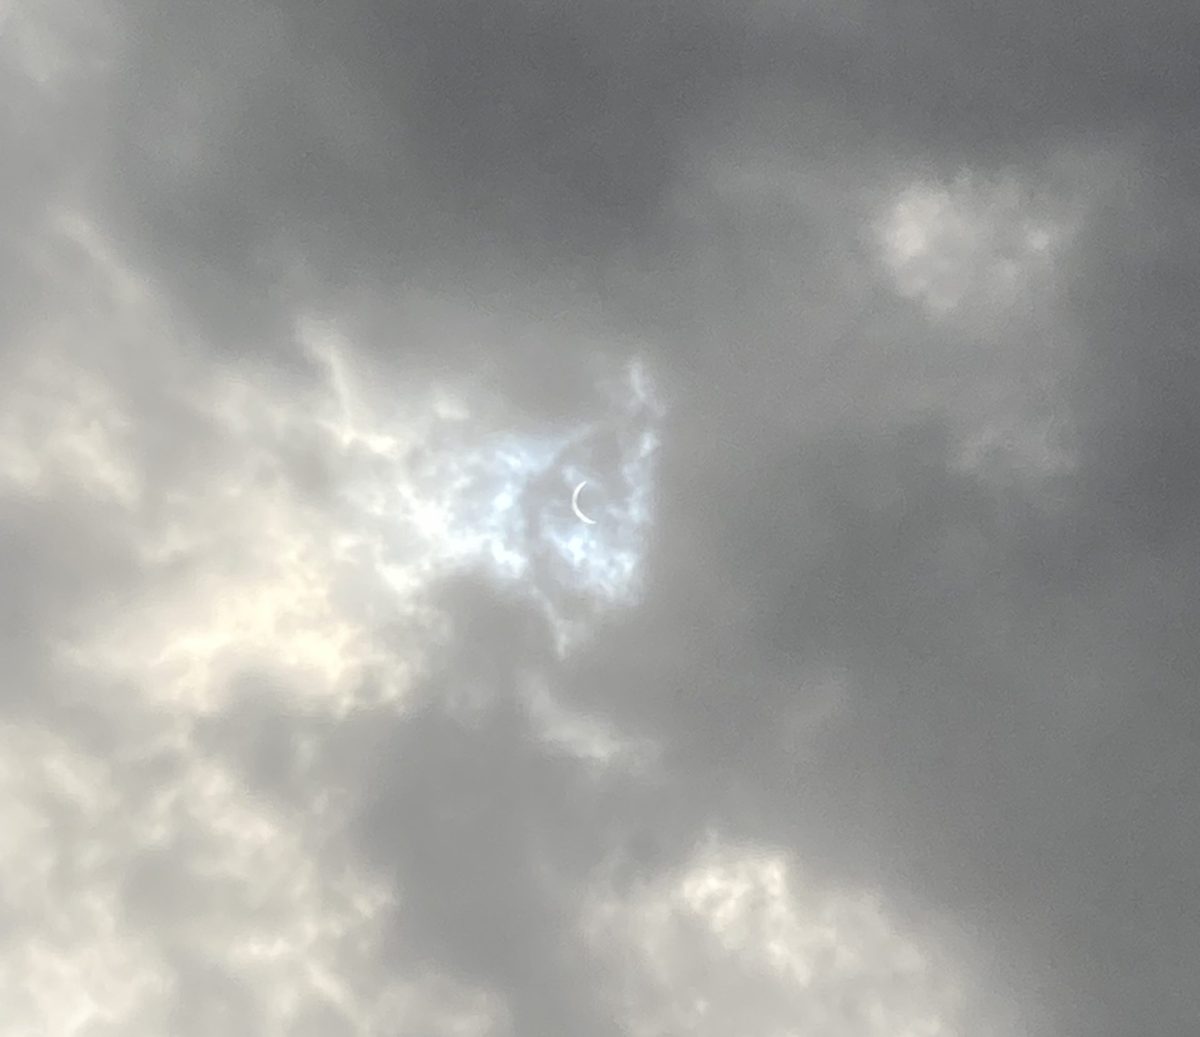 Clouds+obscure+a+90%25+eclipse